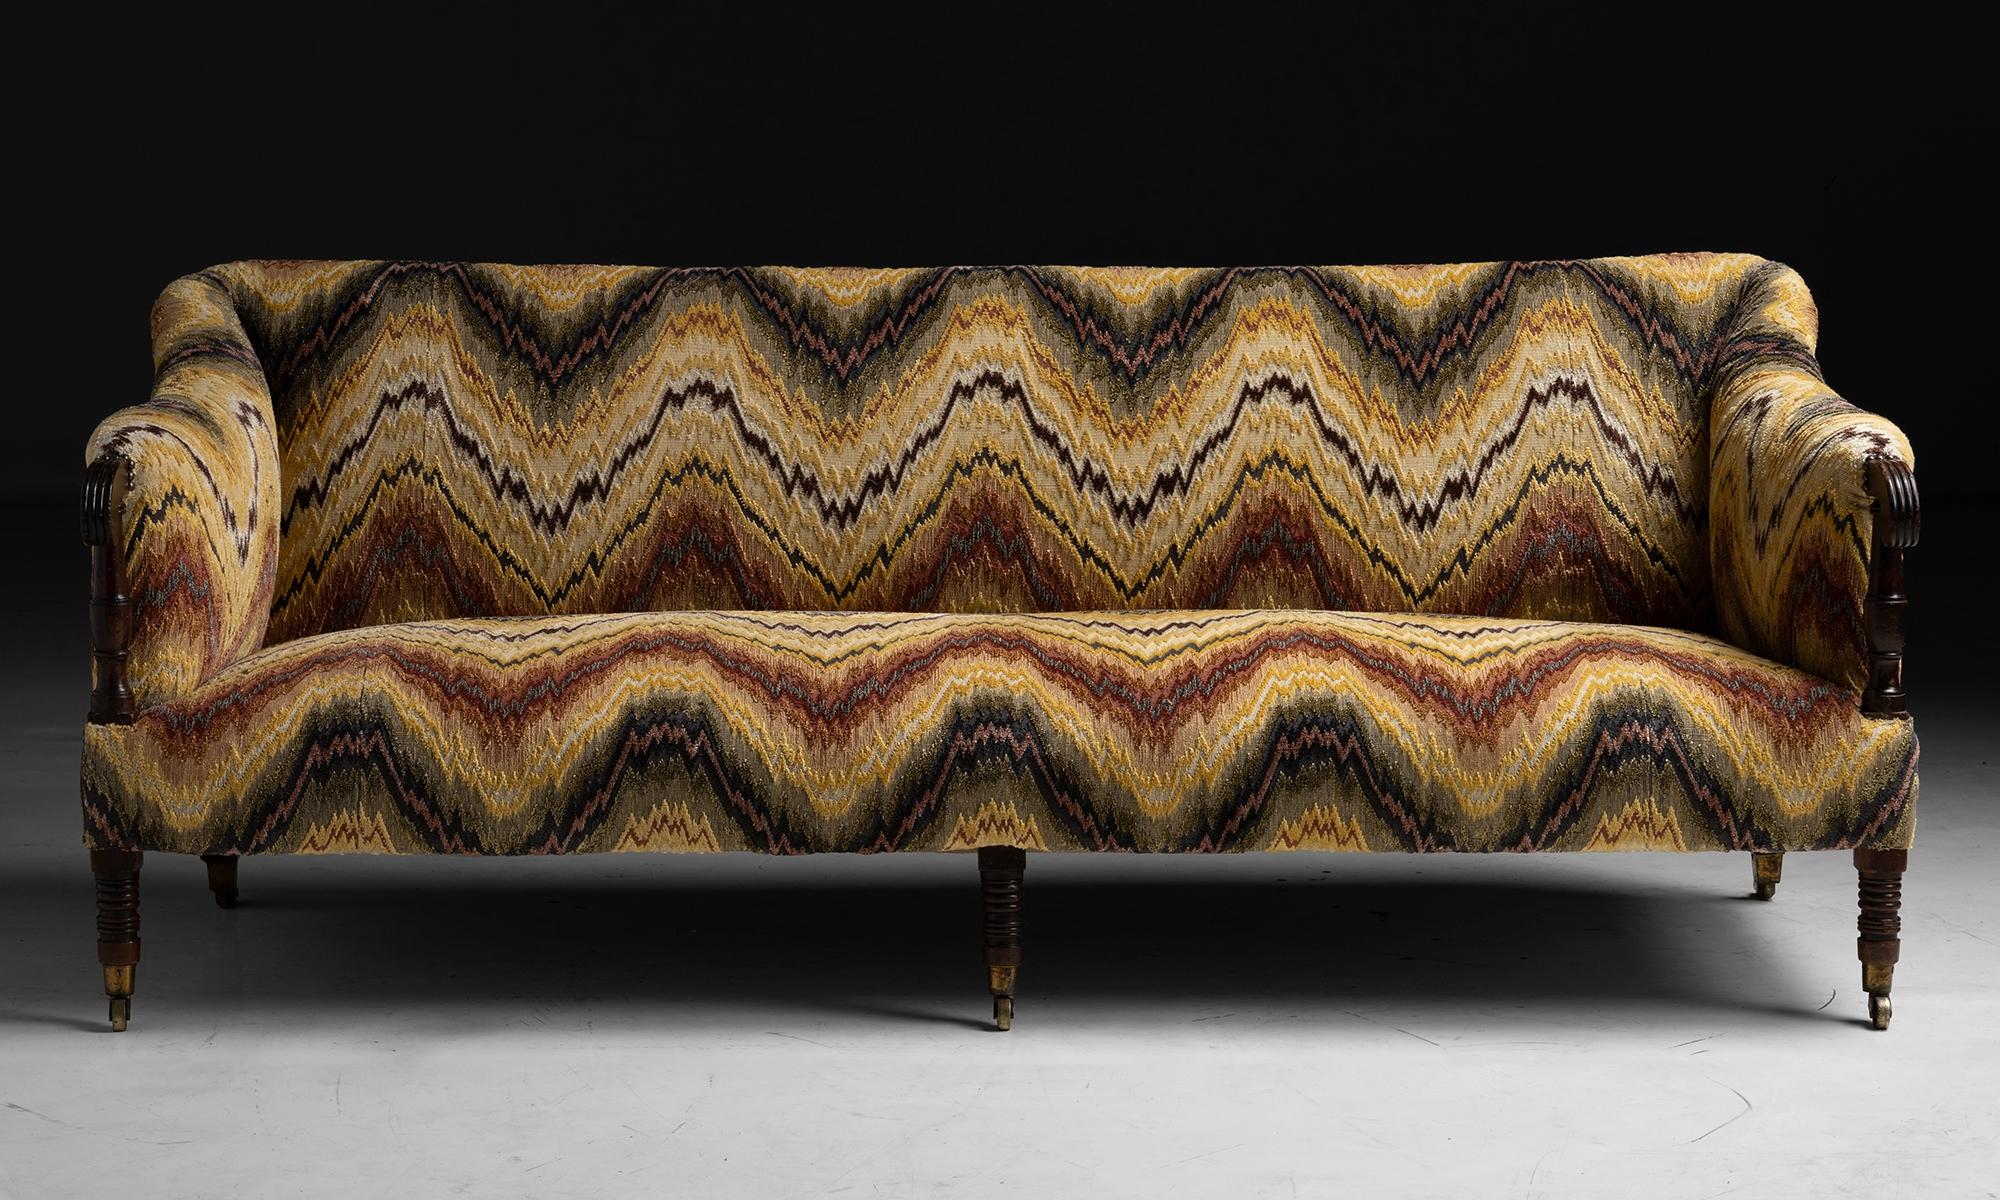 Linen Regency Sofa in Pierre Frey Fabric, England circa 1820